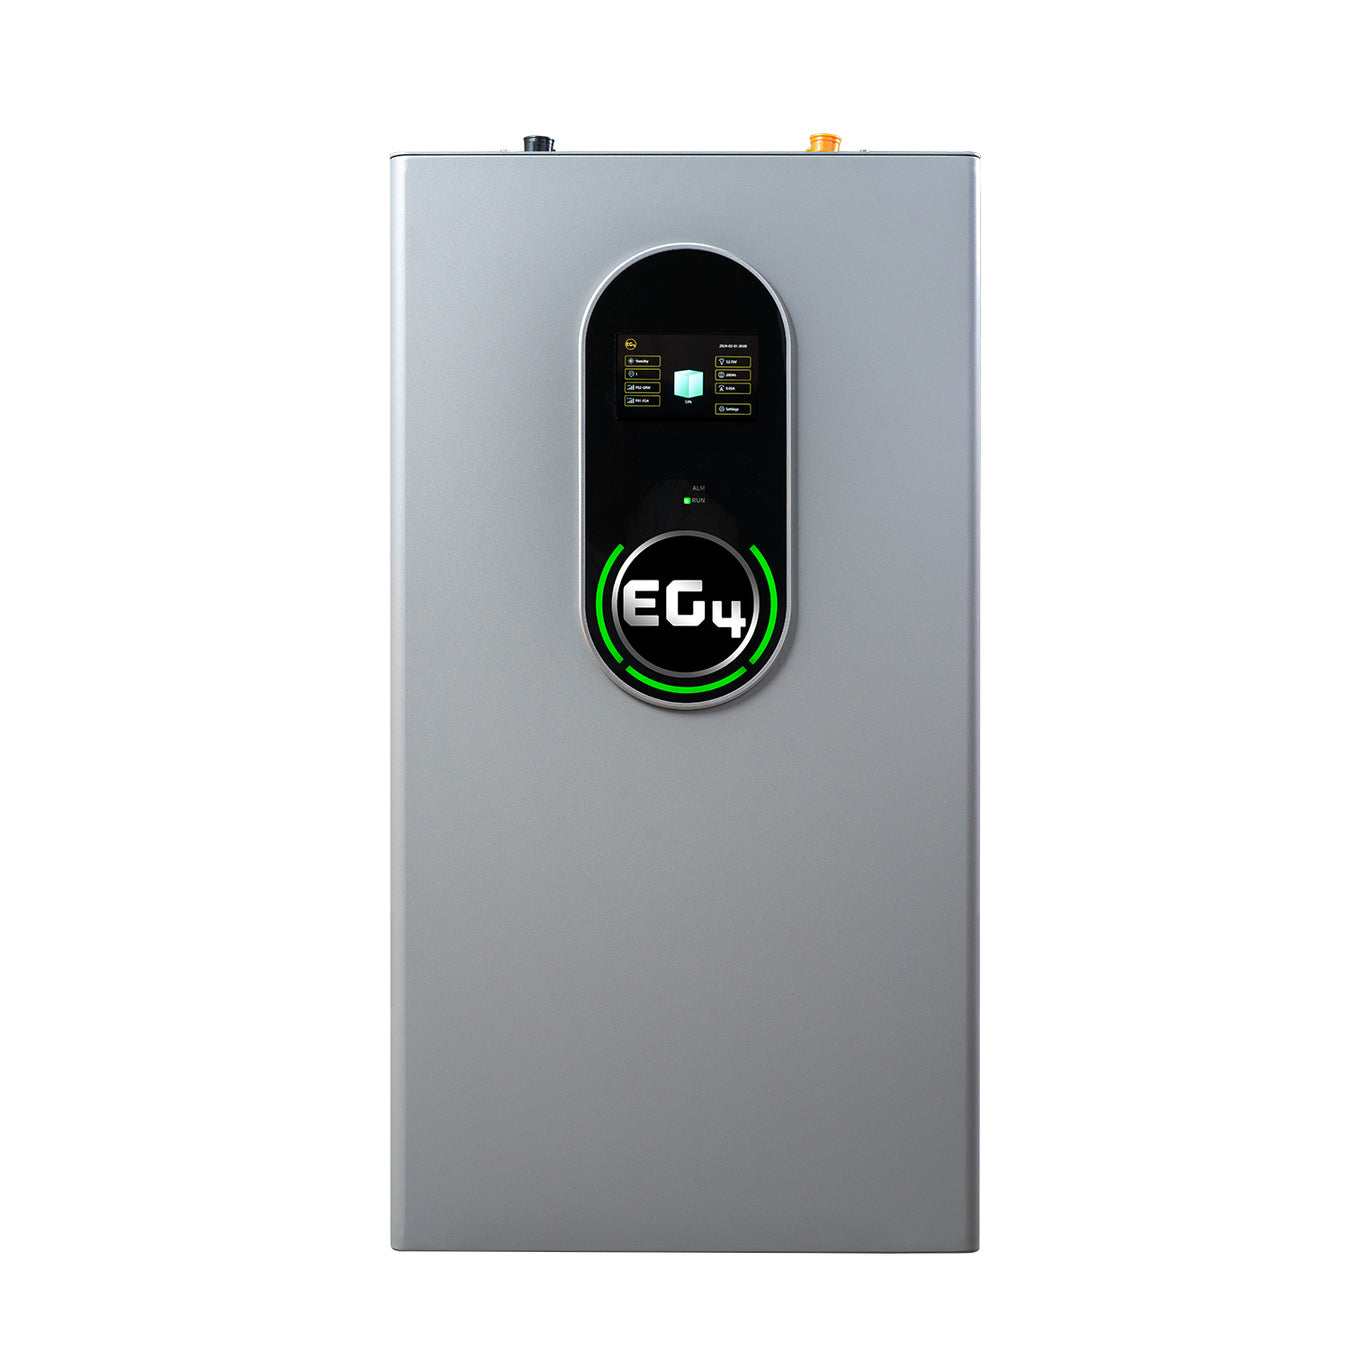 UL9540A certified EG4 wall-mount indoor battery, 280AH 51.2V, designed for safe and efficient energy storage.